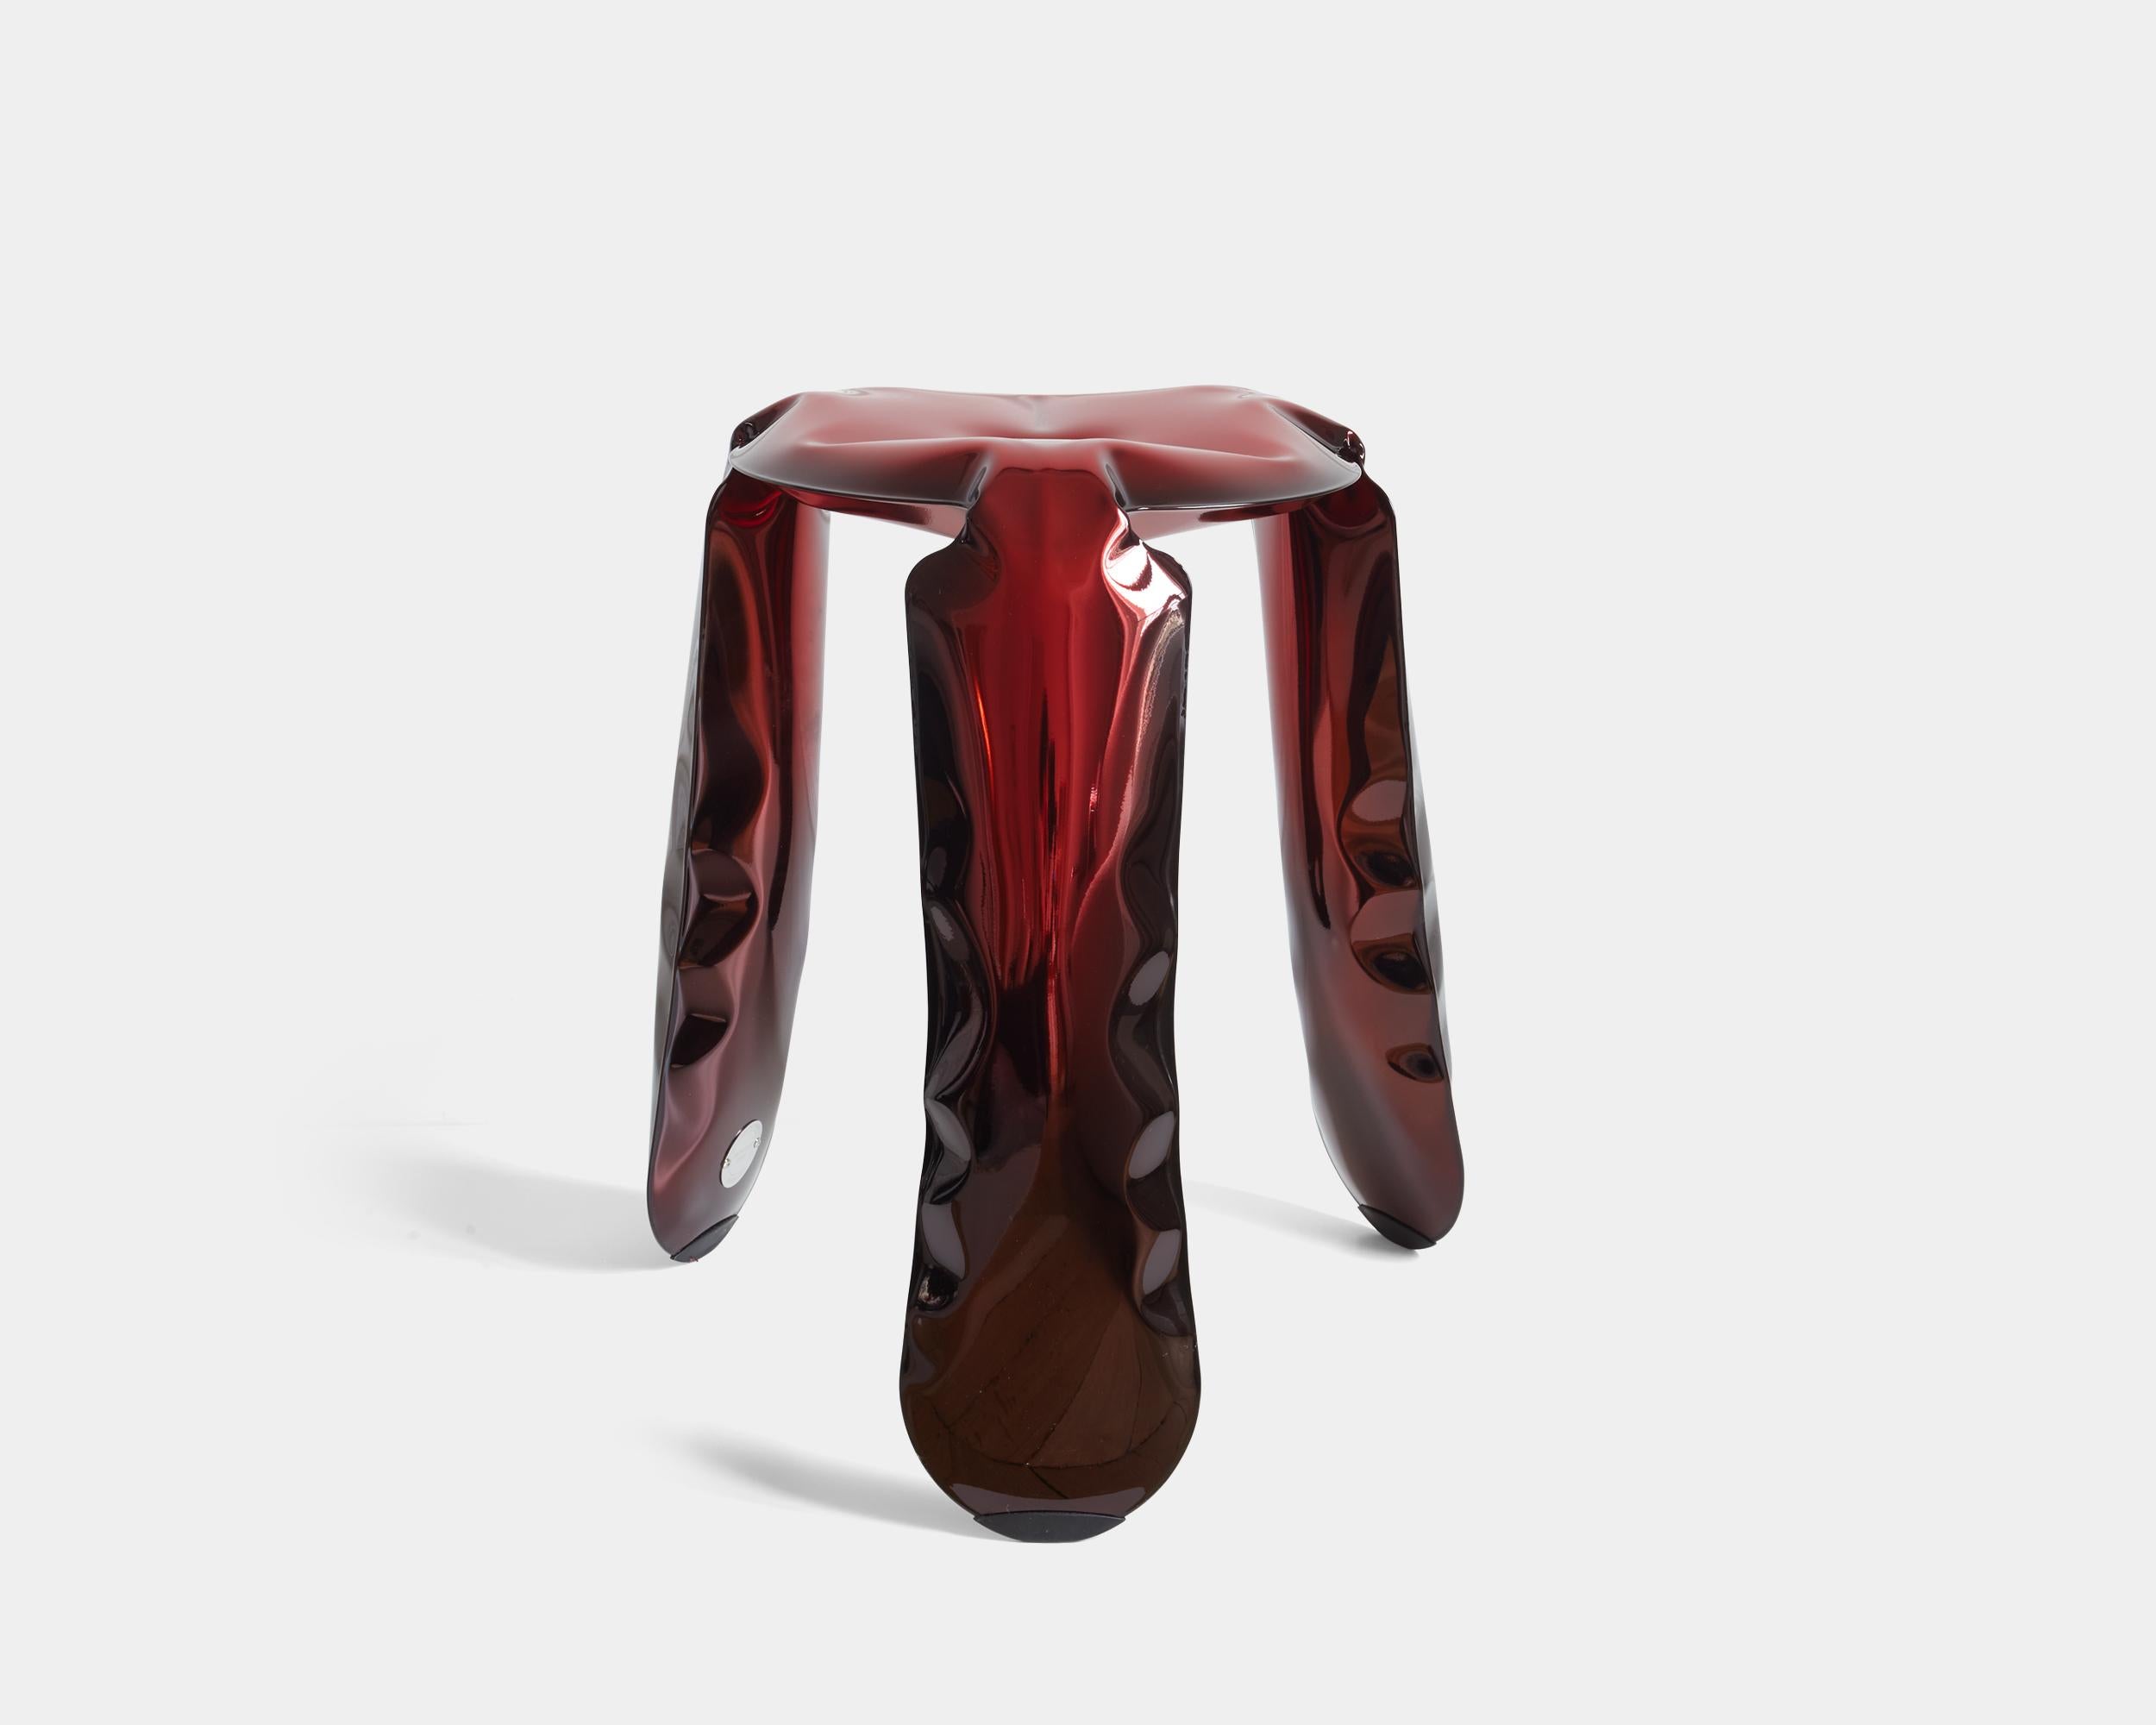 Polish Contemporary Stool 'Plopp' by Zieta, Rubin Red For Sale